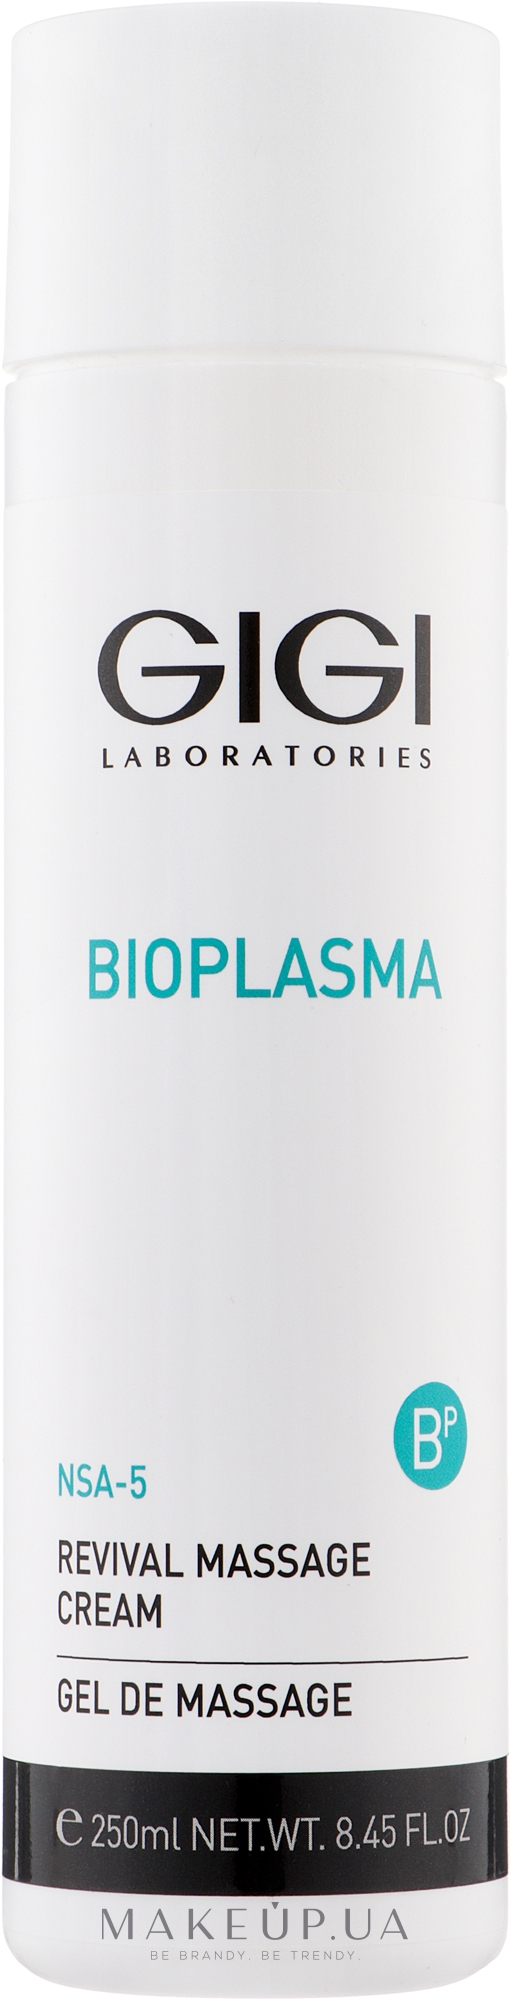 Масажний крем - Gigi Bioplasma NSA-5 Revival Massage Cream — фото 250ml